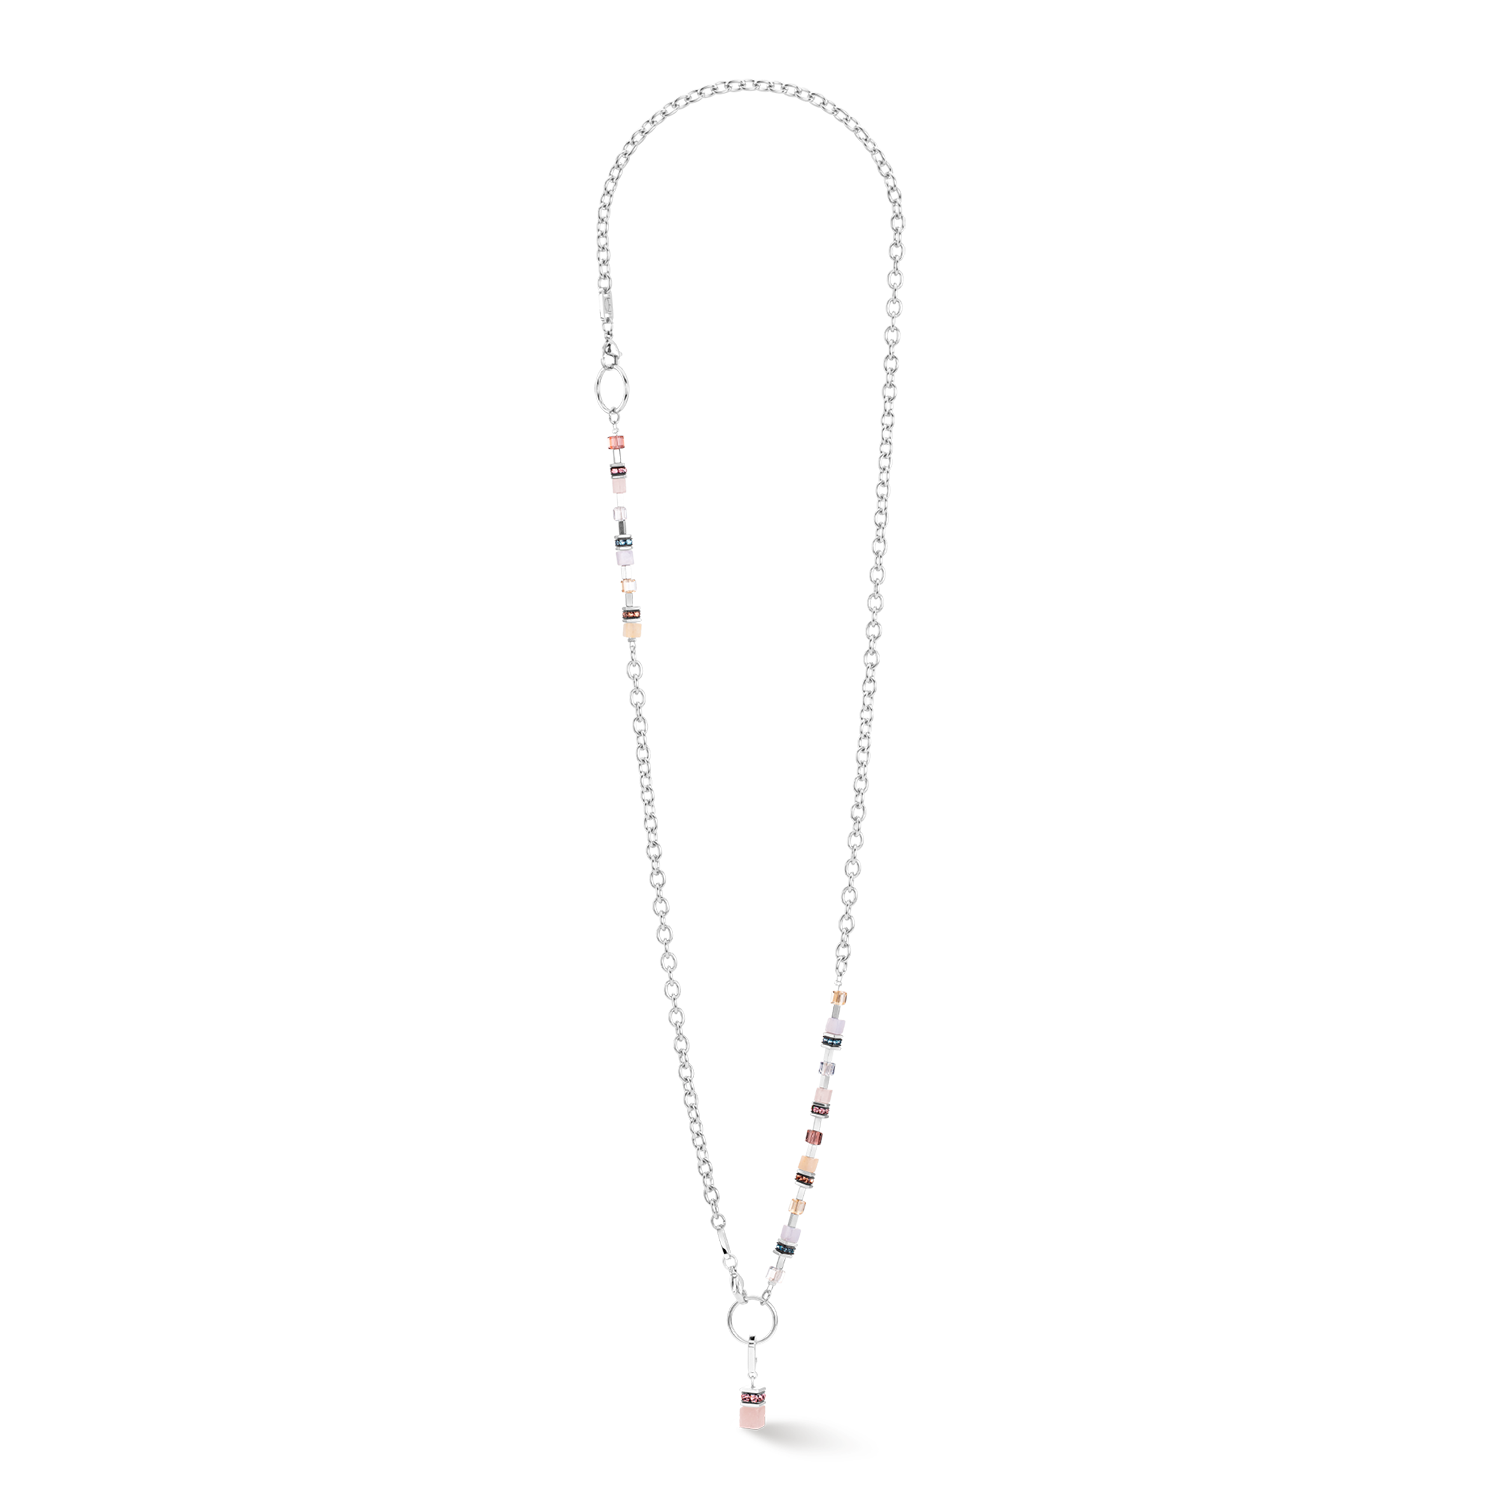 GeoCUBE® Fusion Charm necklace silver-pastel